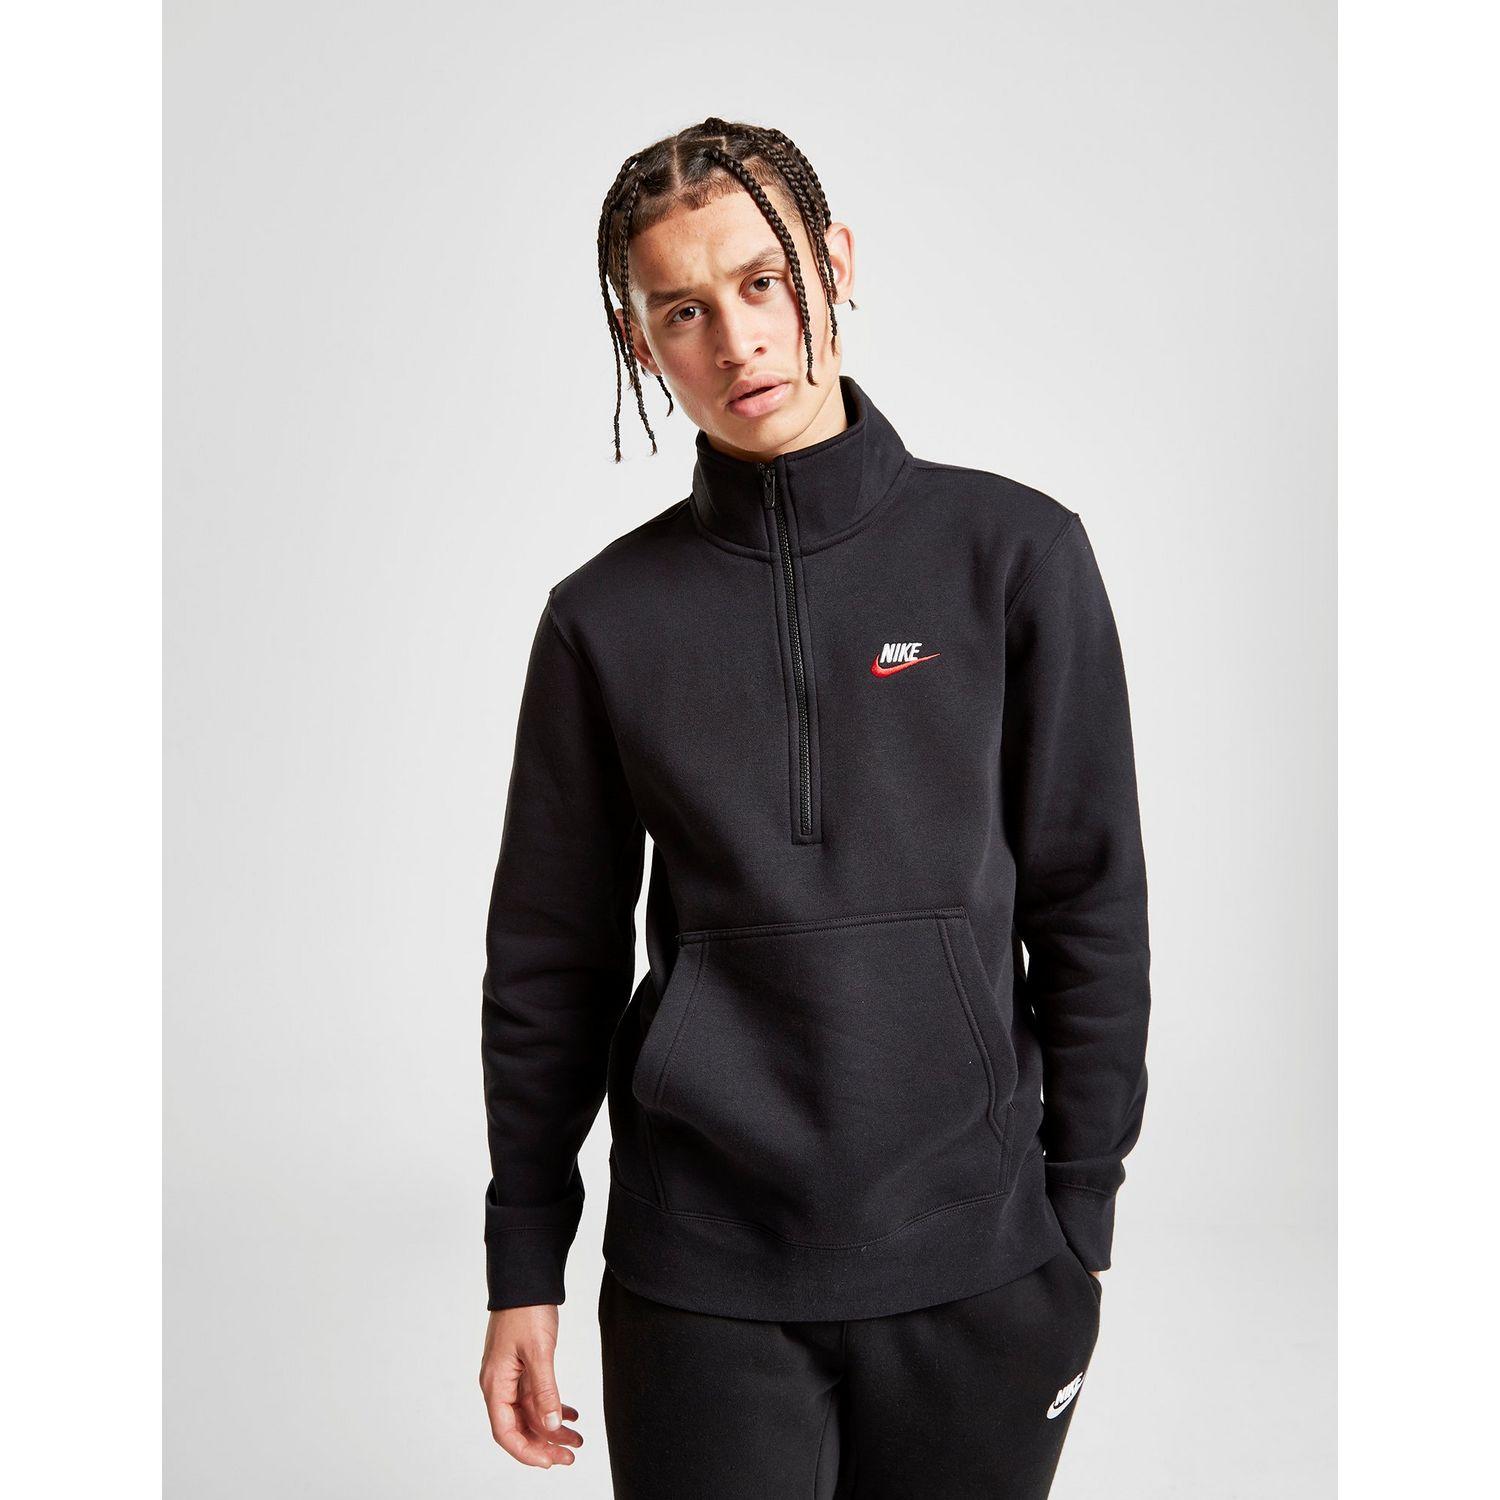 Nike Cotton Foundation 1/2 Zip Sweatshirt in Black for Men - Lyst